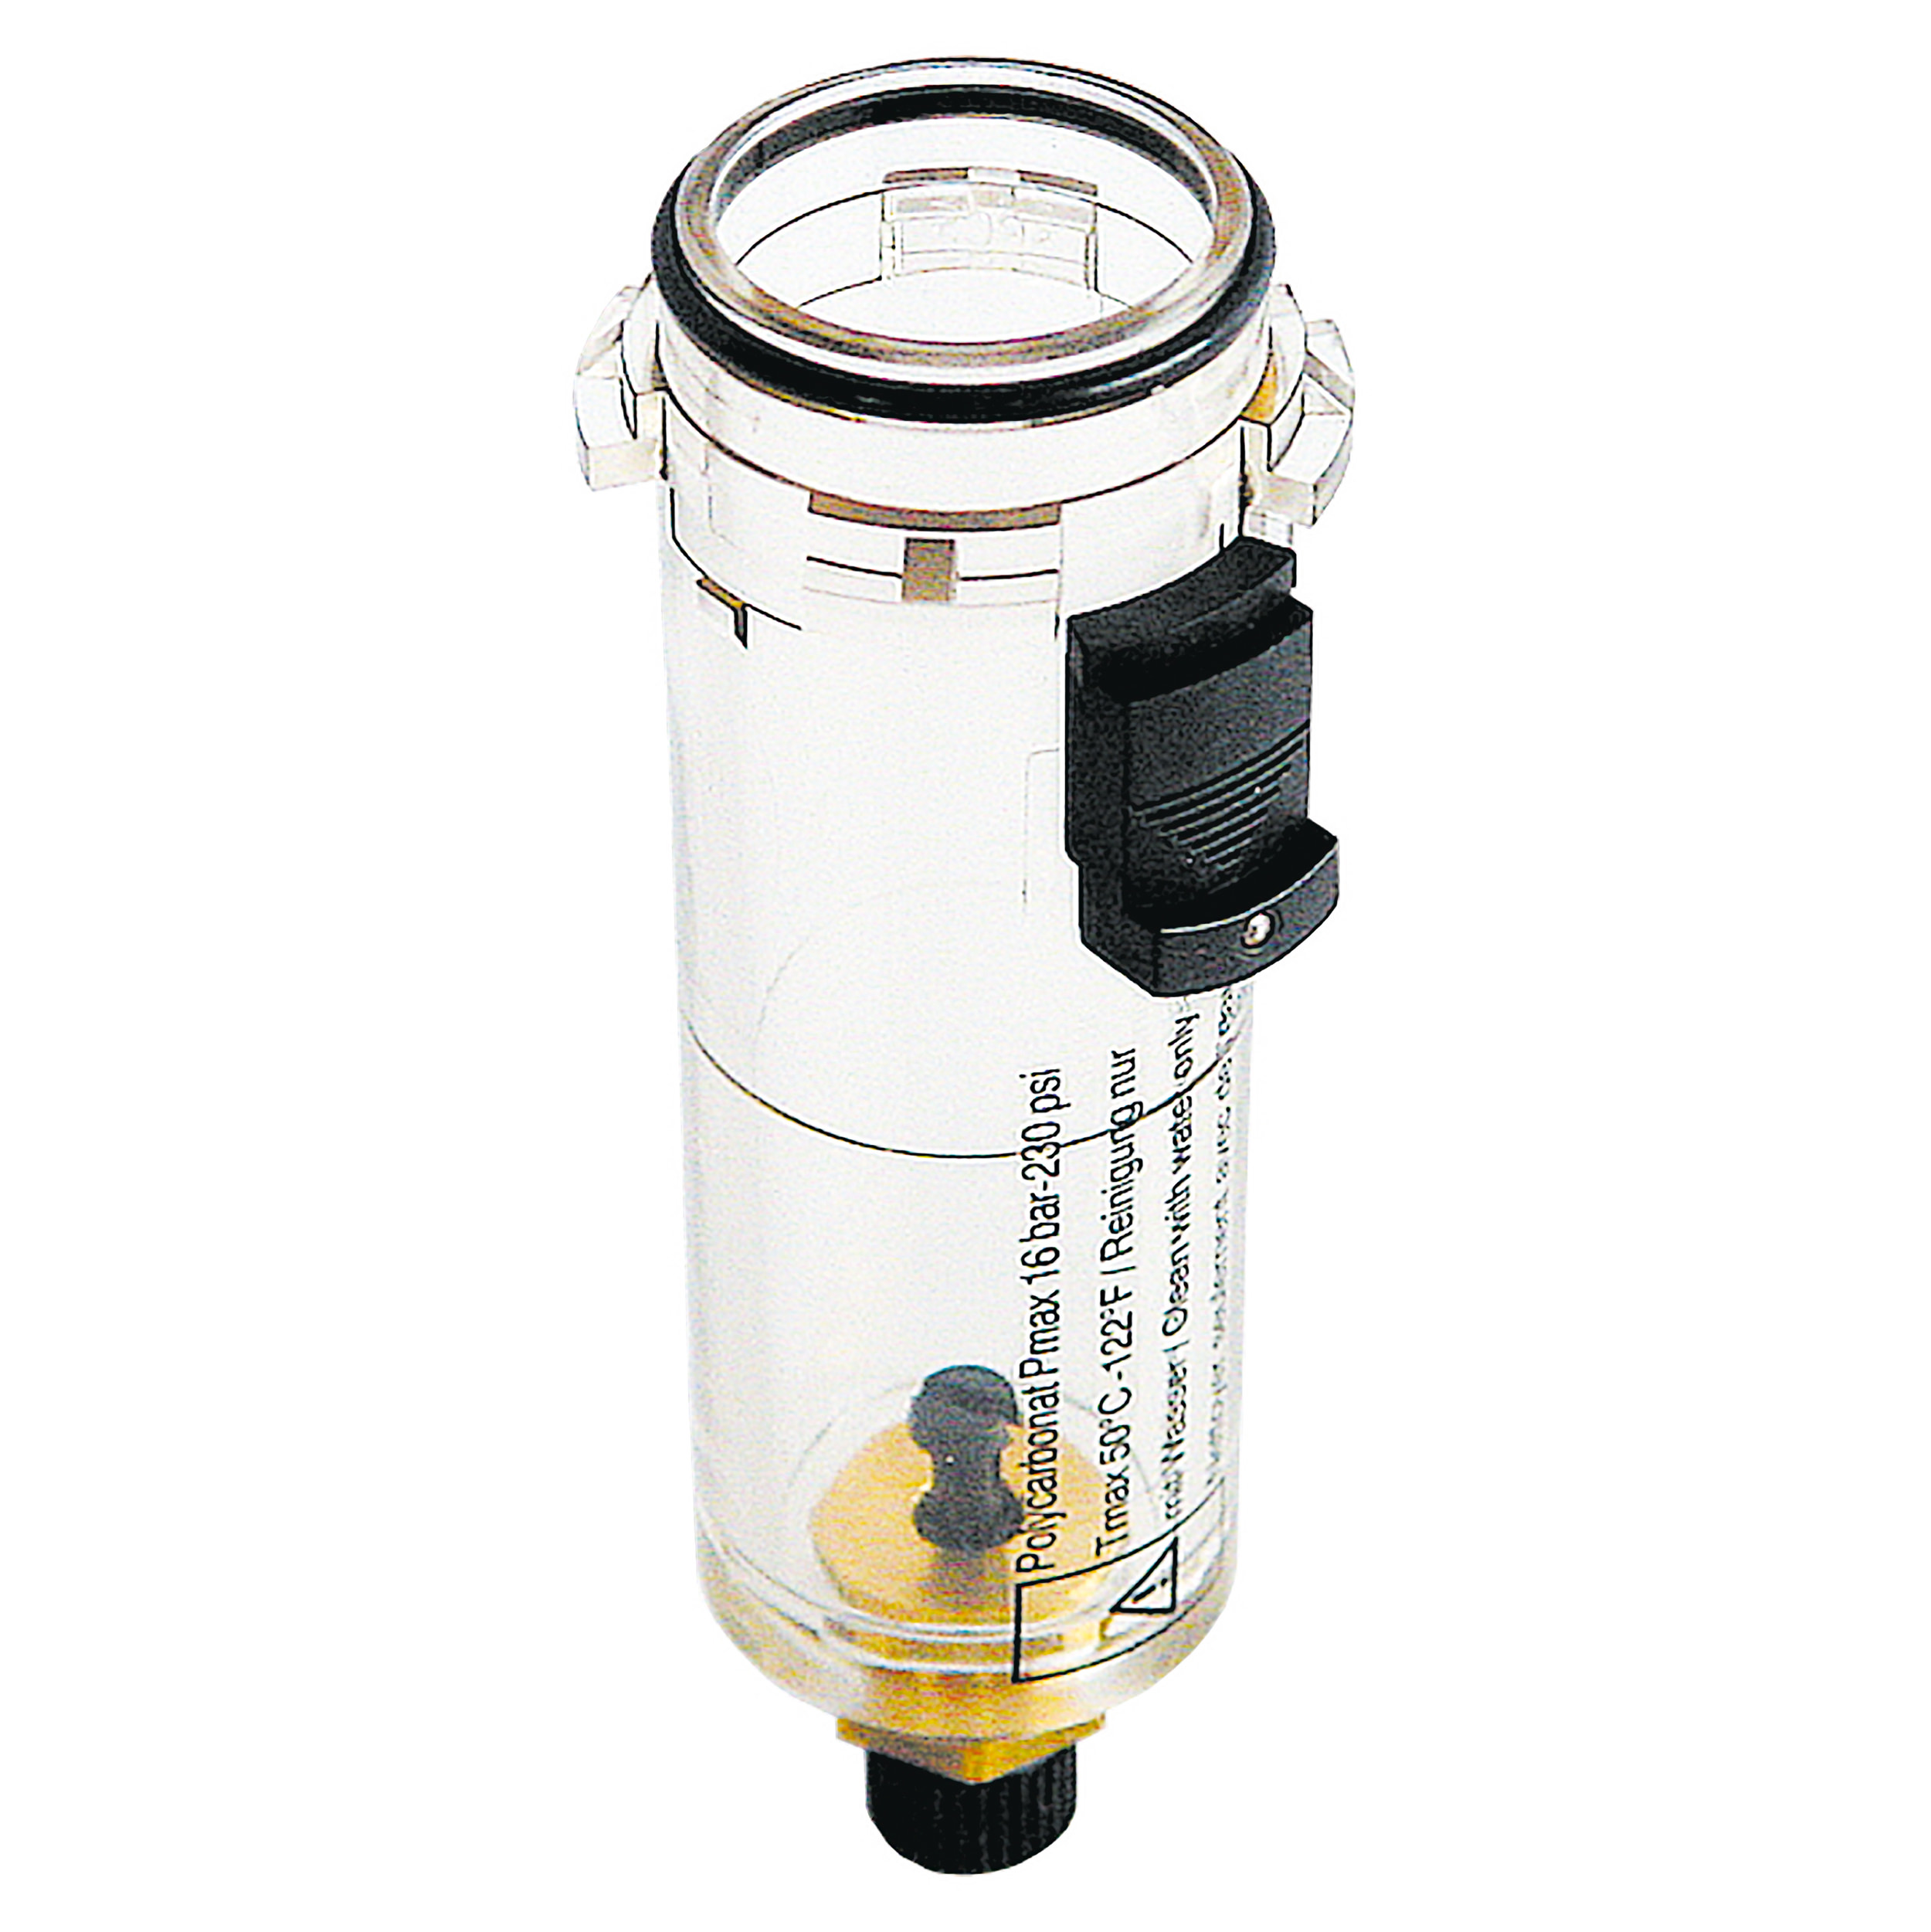 Kunststoffbehälter variobloc, passend für: BG 20, BG 30; Handablassventil